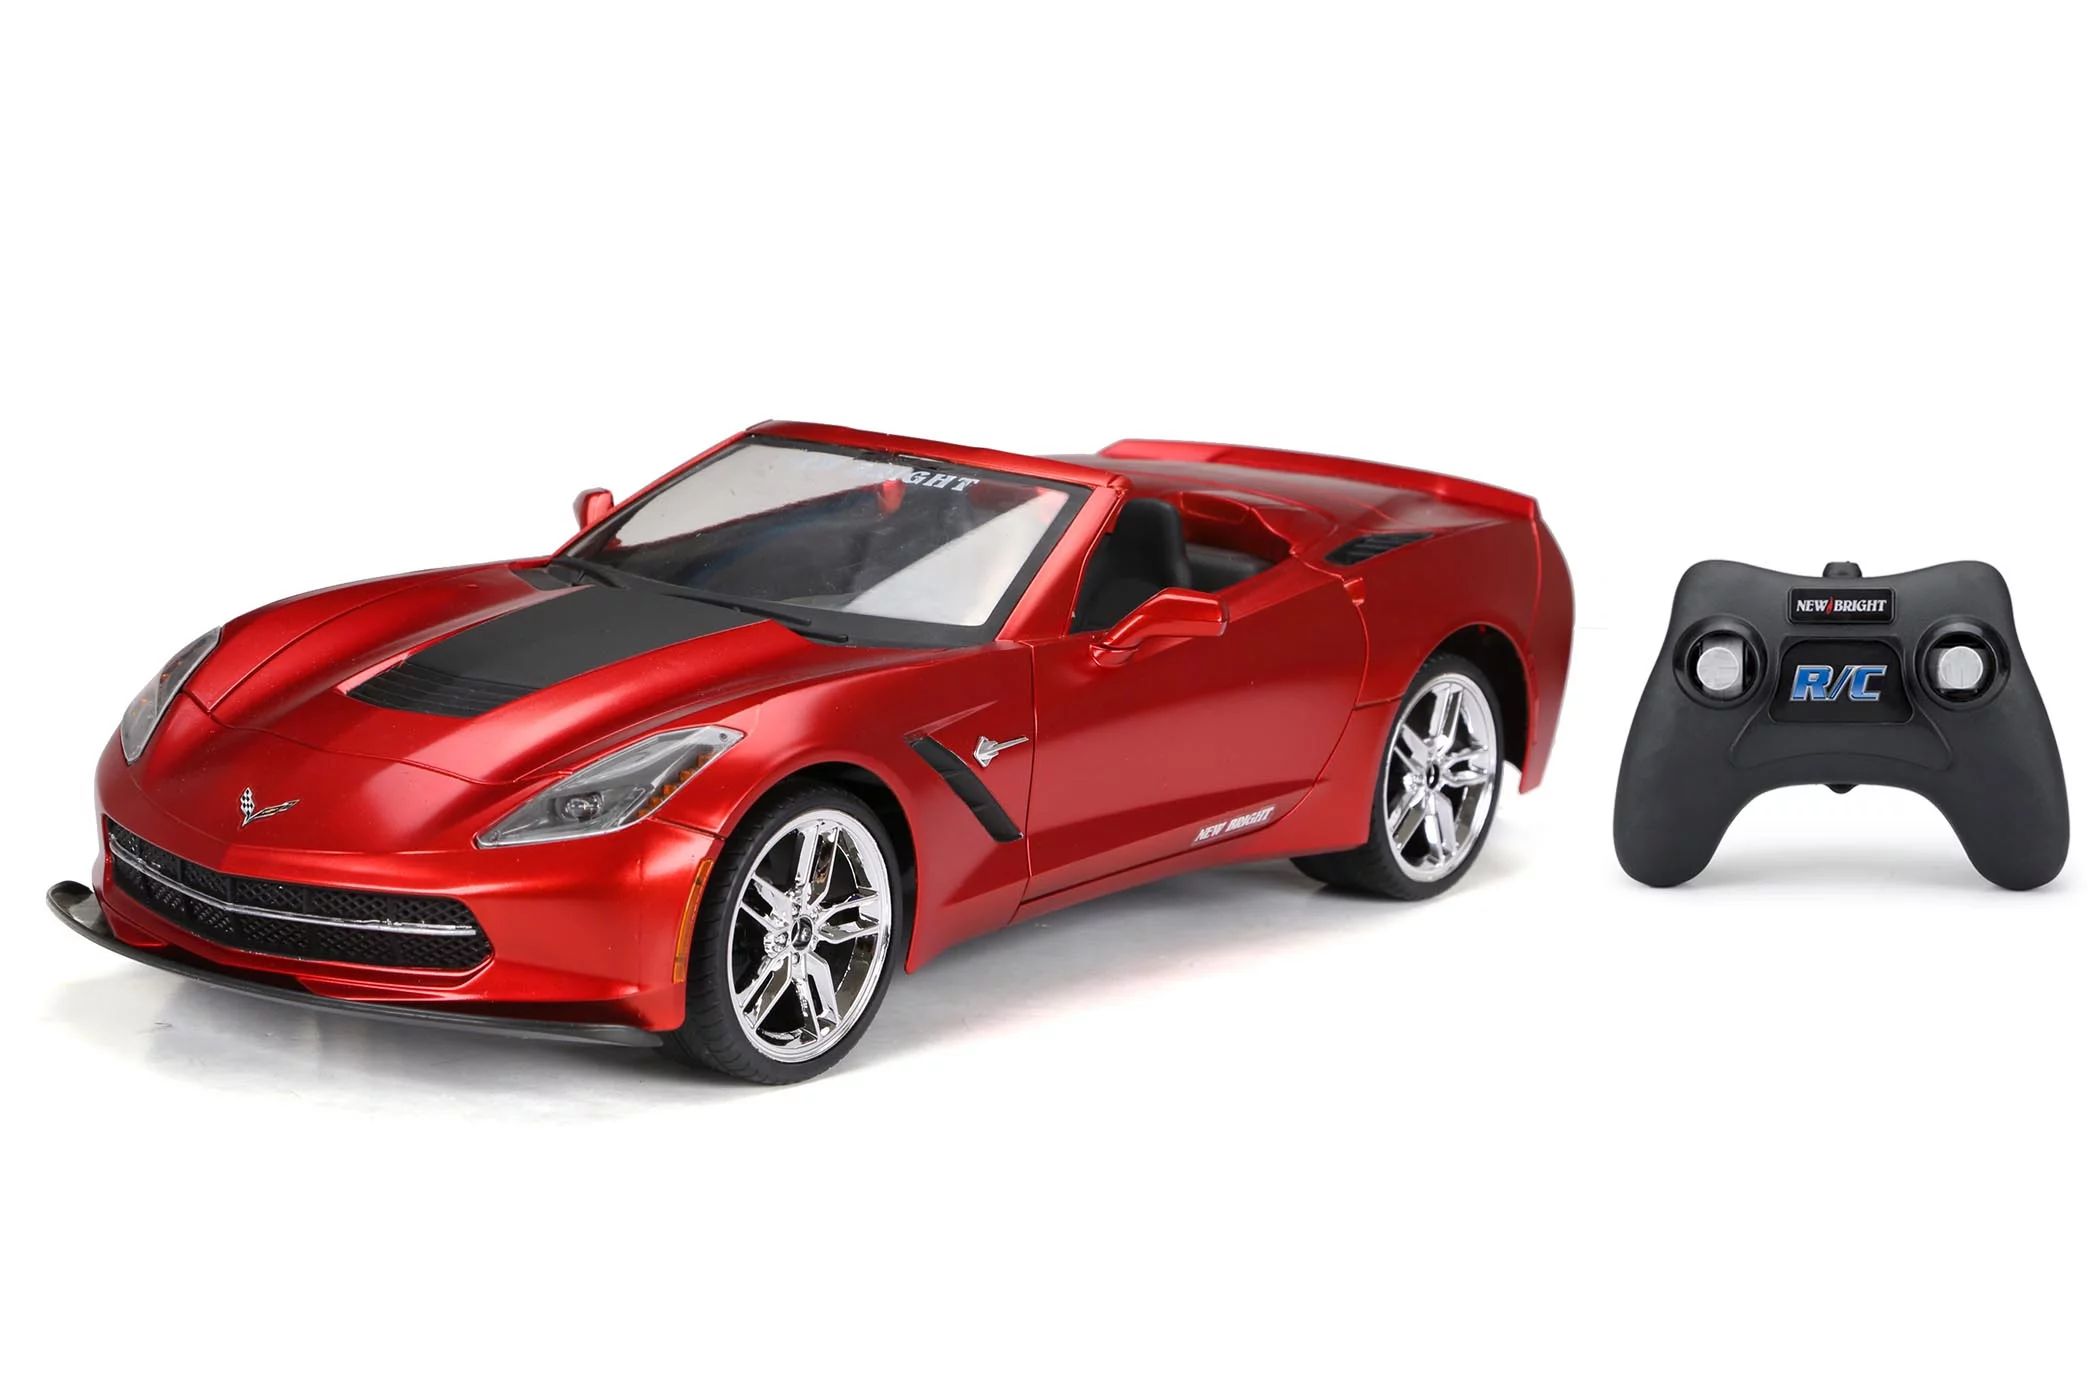 New Bright (1:8) Corvette Battery Radio Control Sports Car, 60816U-R - Walmart.com | Walmart (US)